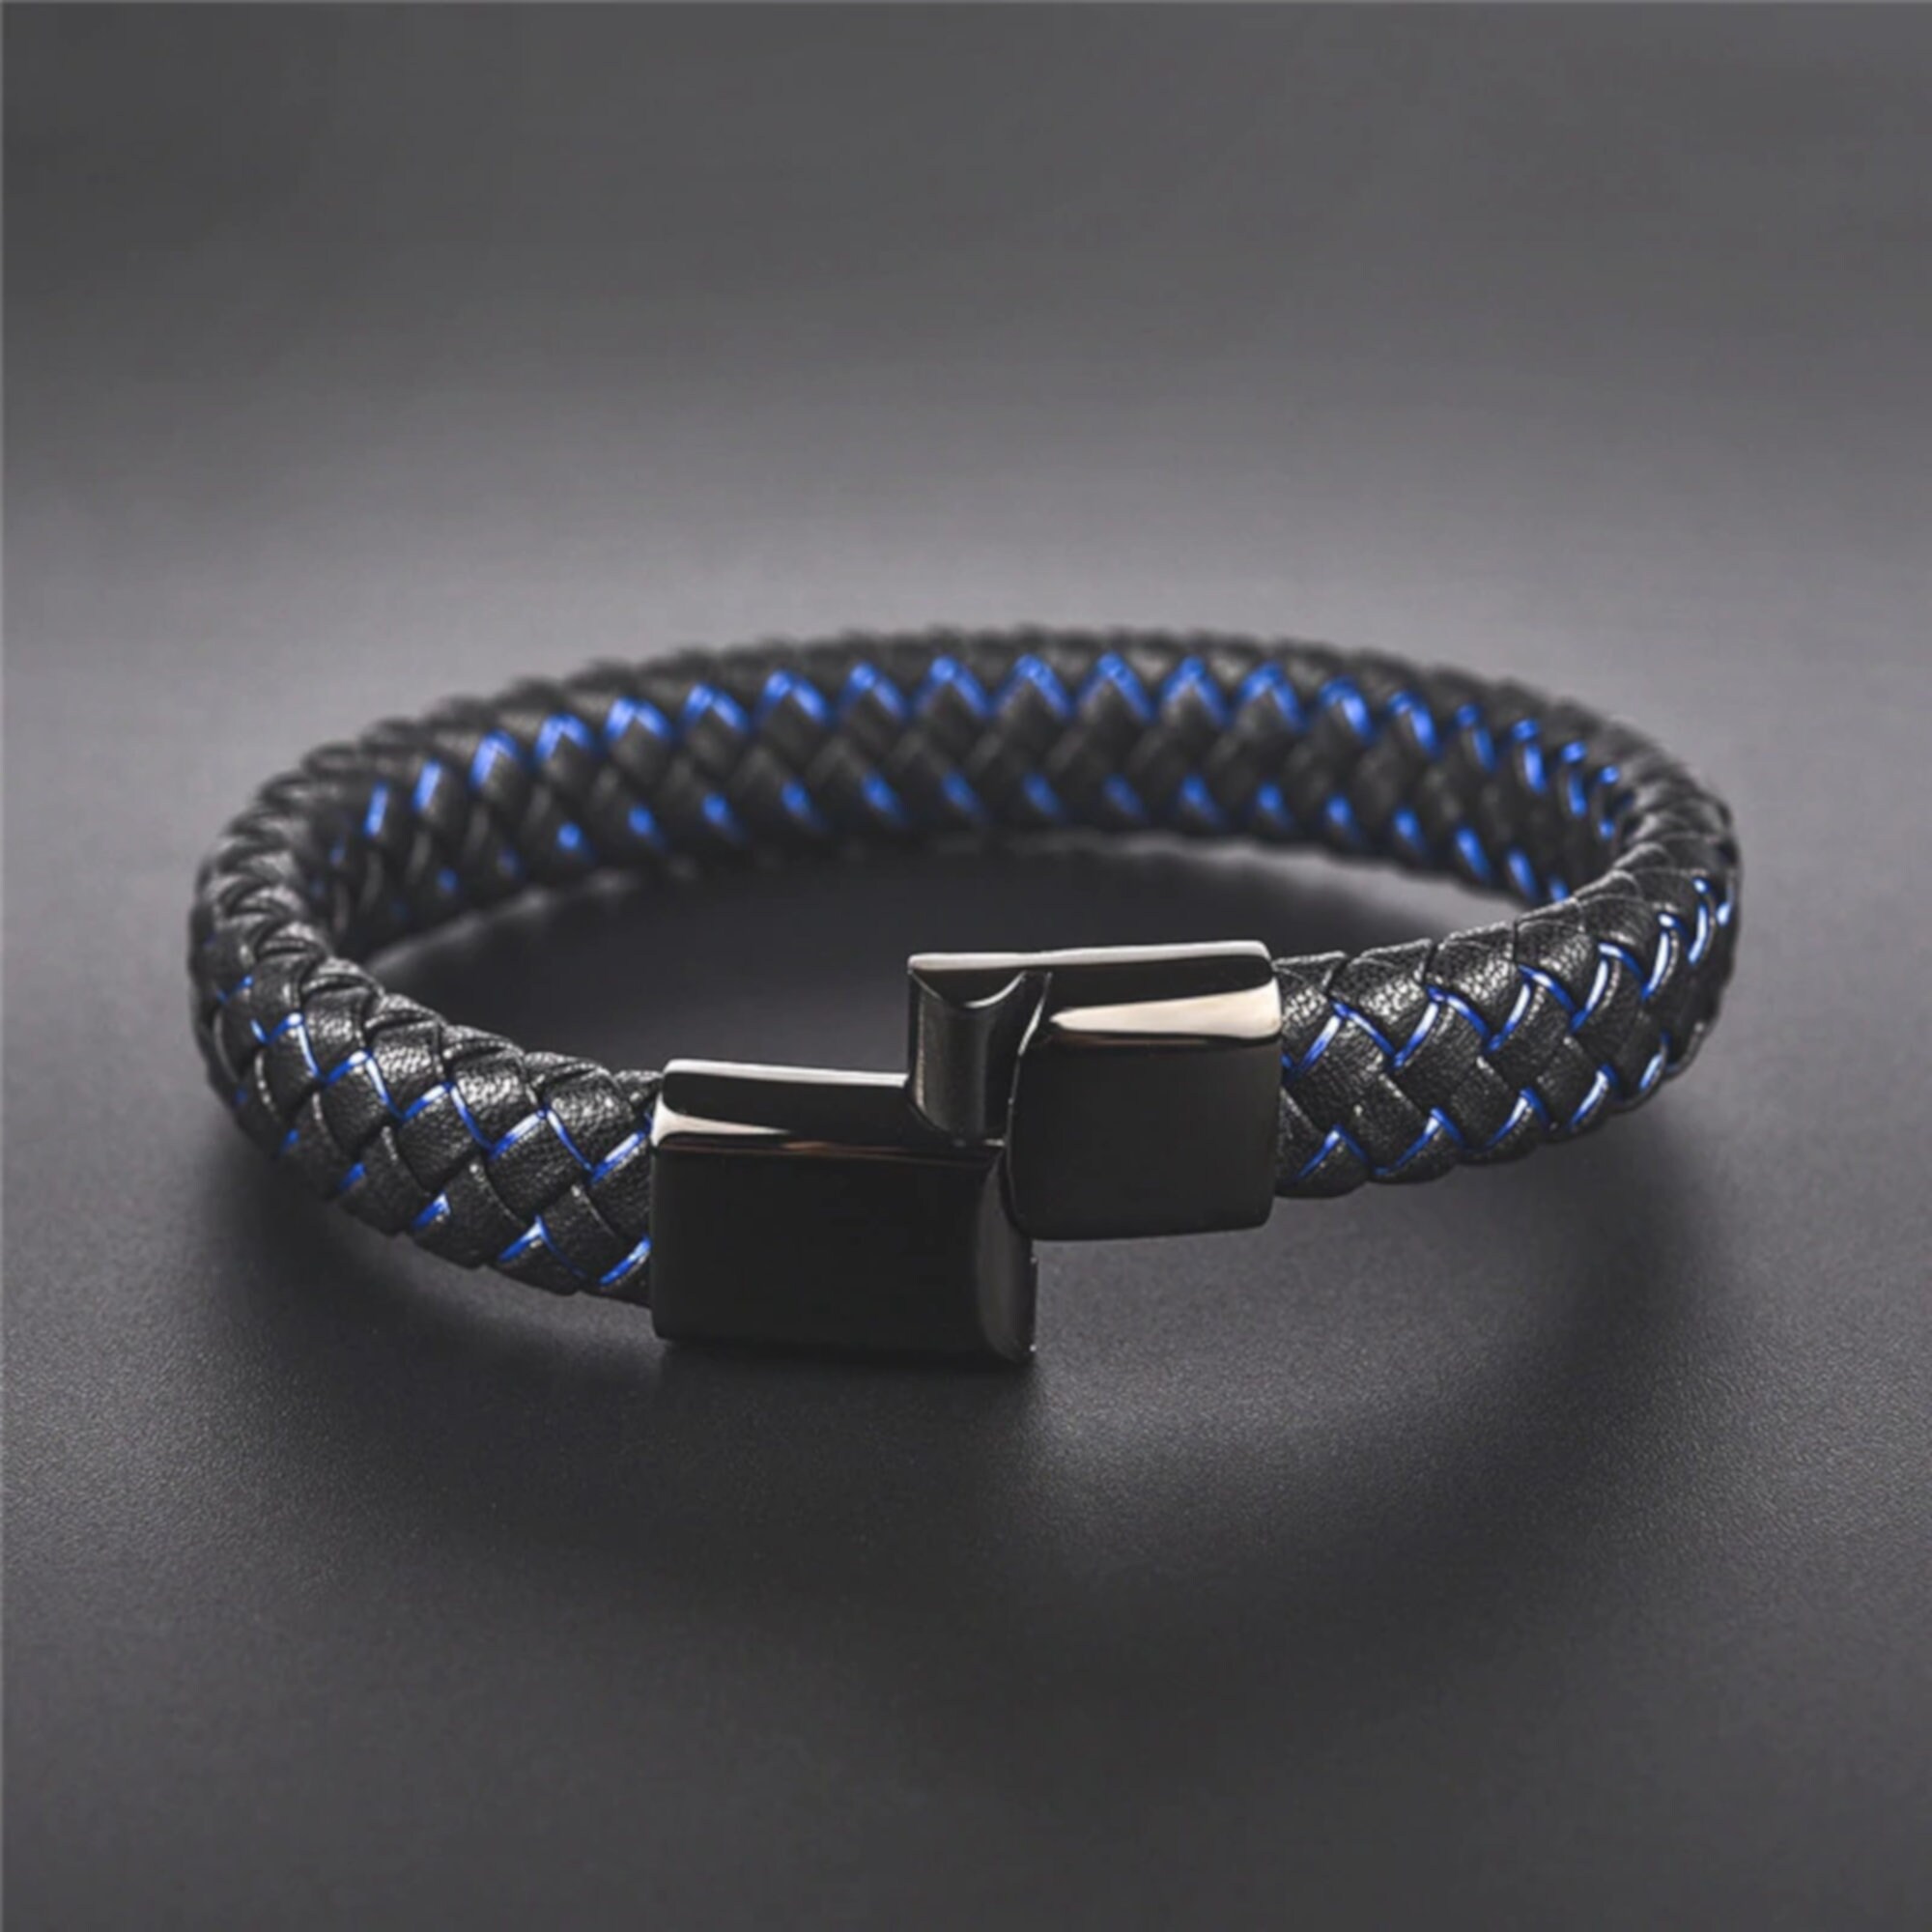 Men's Braided Black Leather Bracelet with Blue Highlight | Etsy